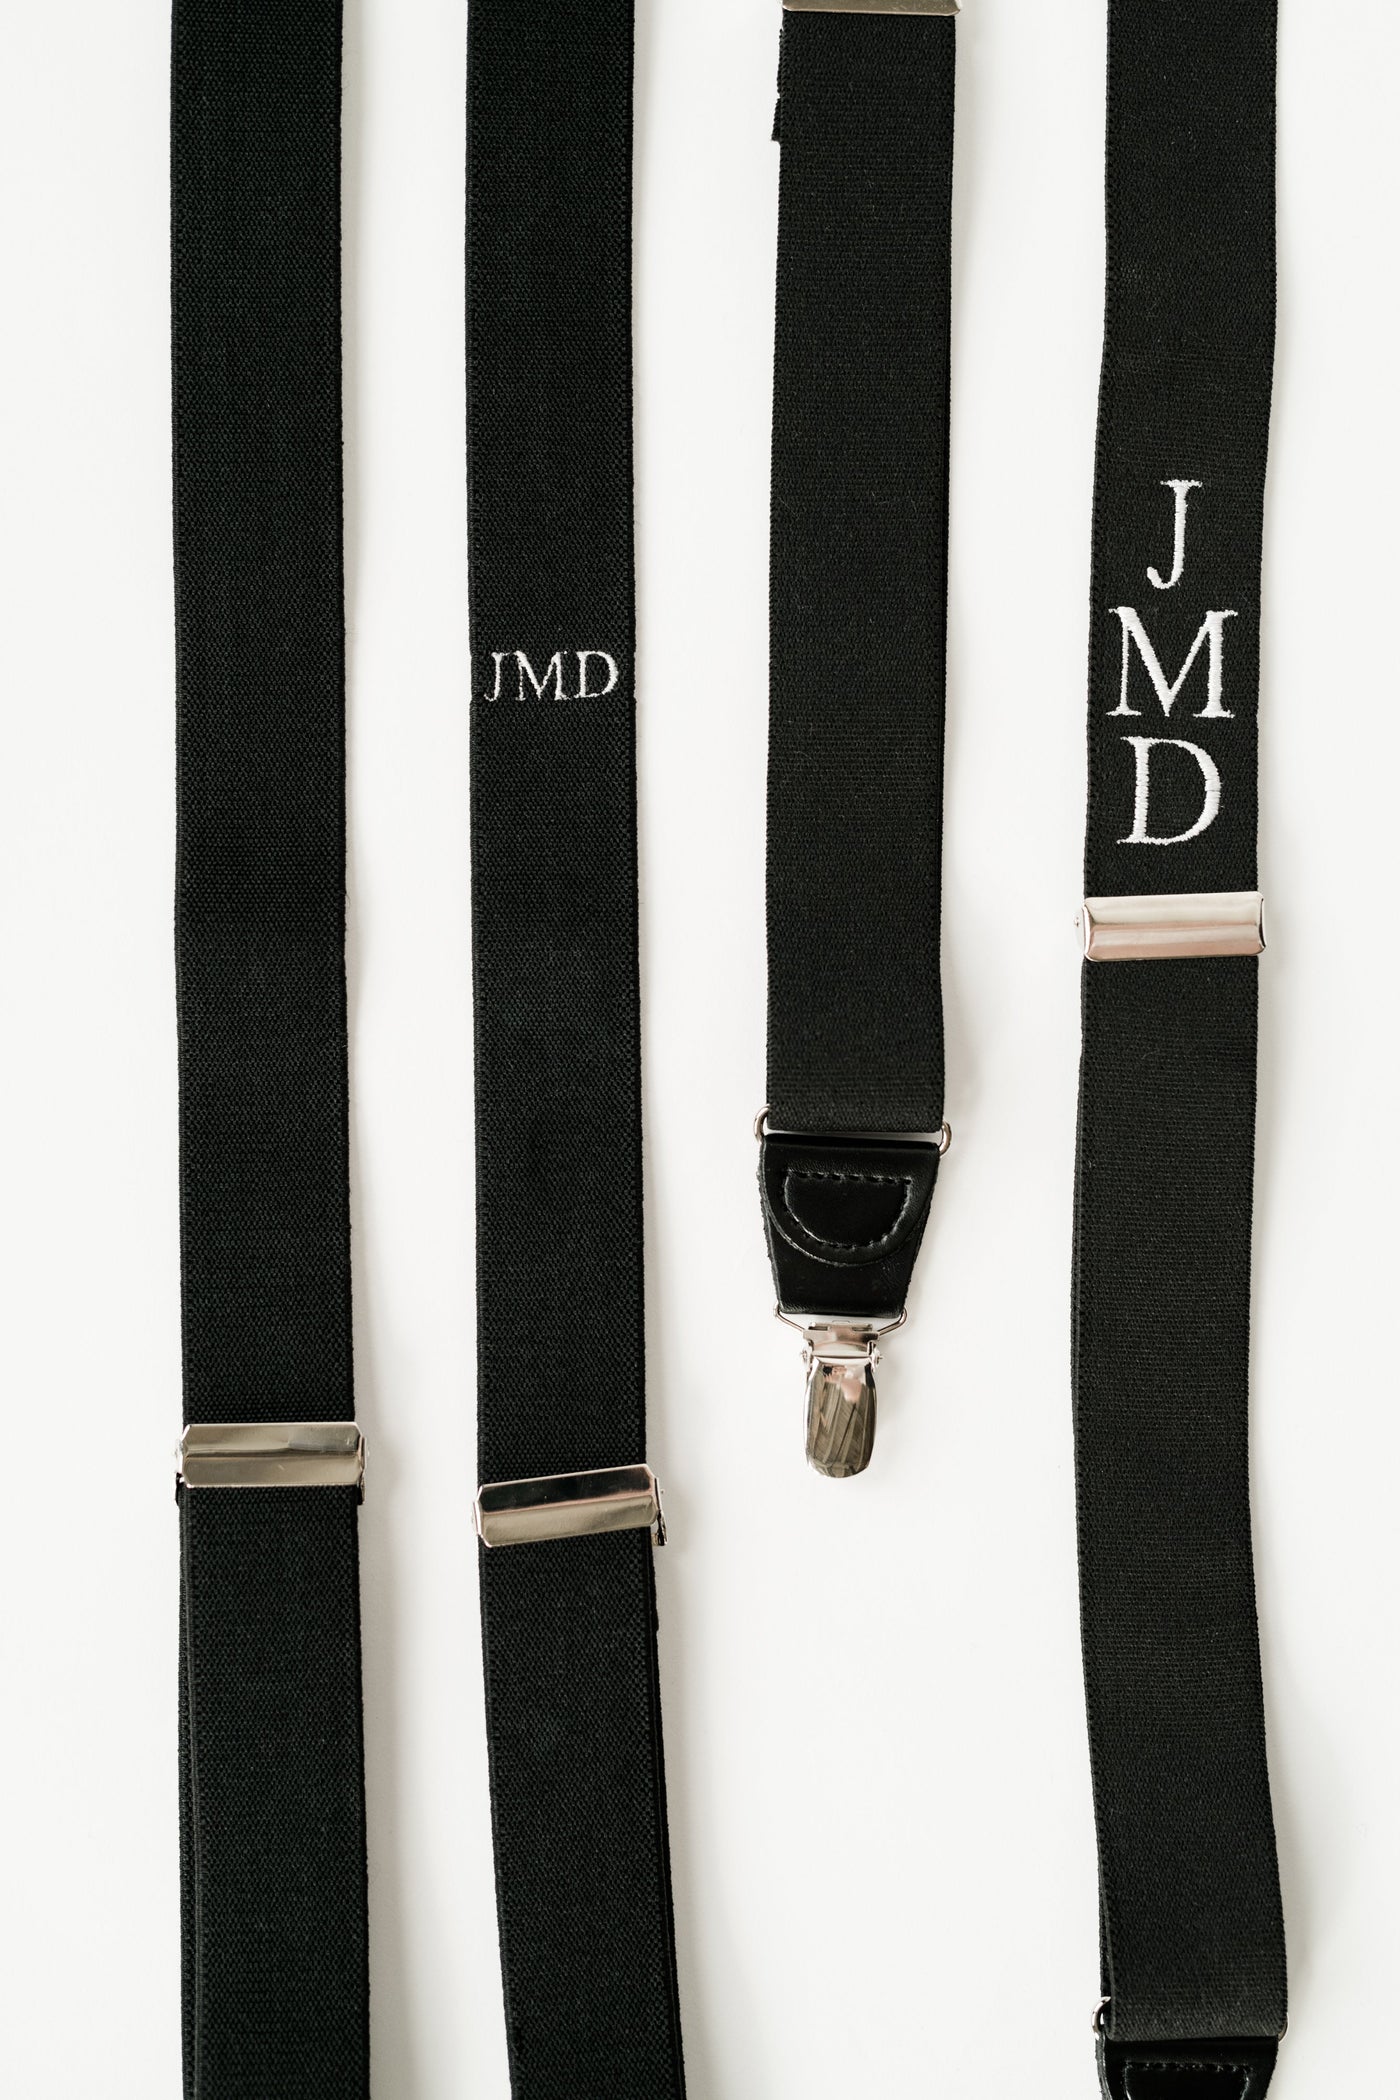 Jeffrey Suspender, Bradley Bow Tie, Joel Handkerchief Bundle | Set of 6